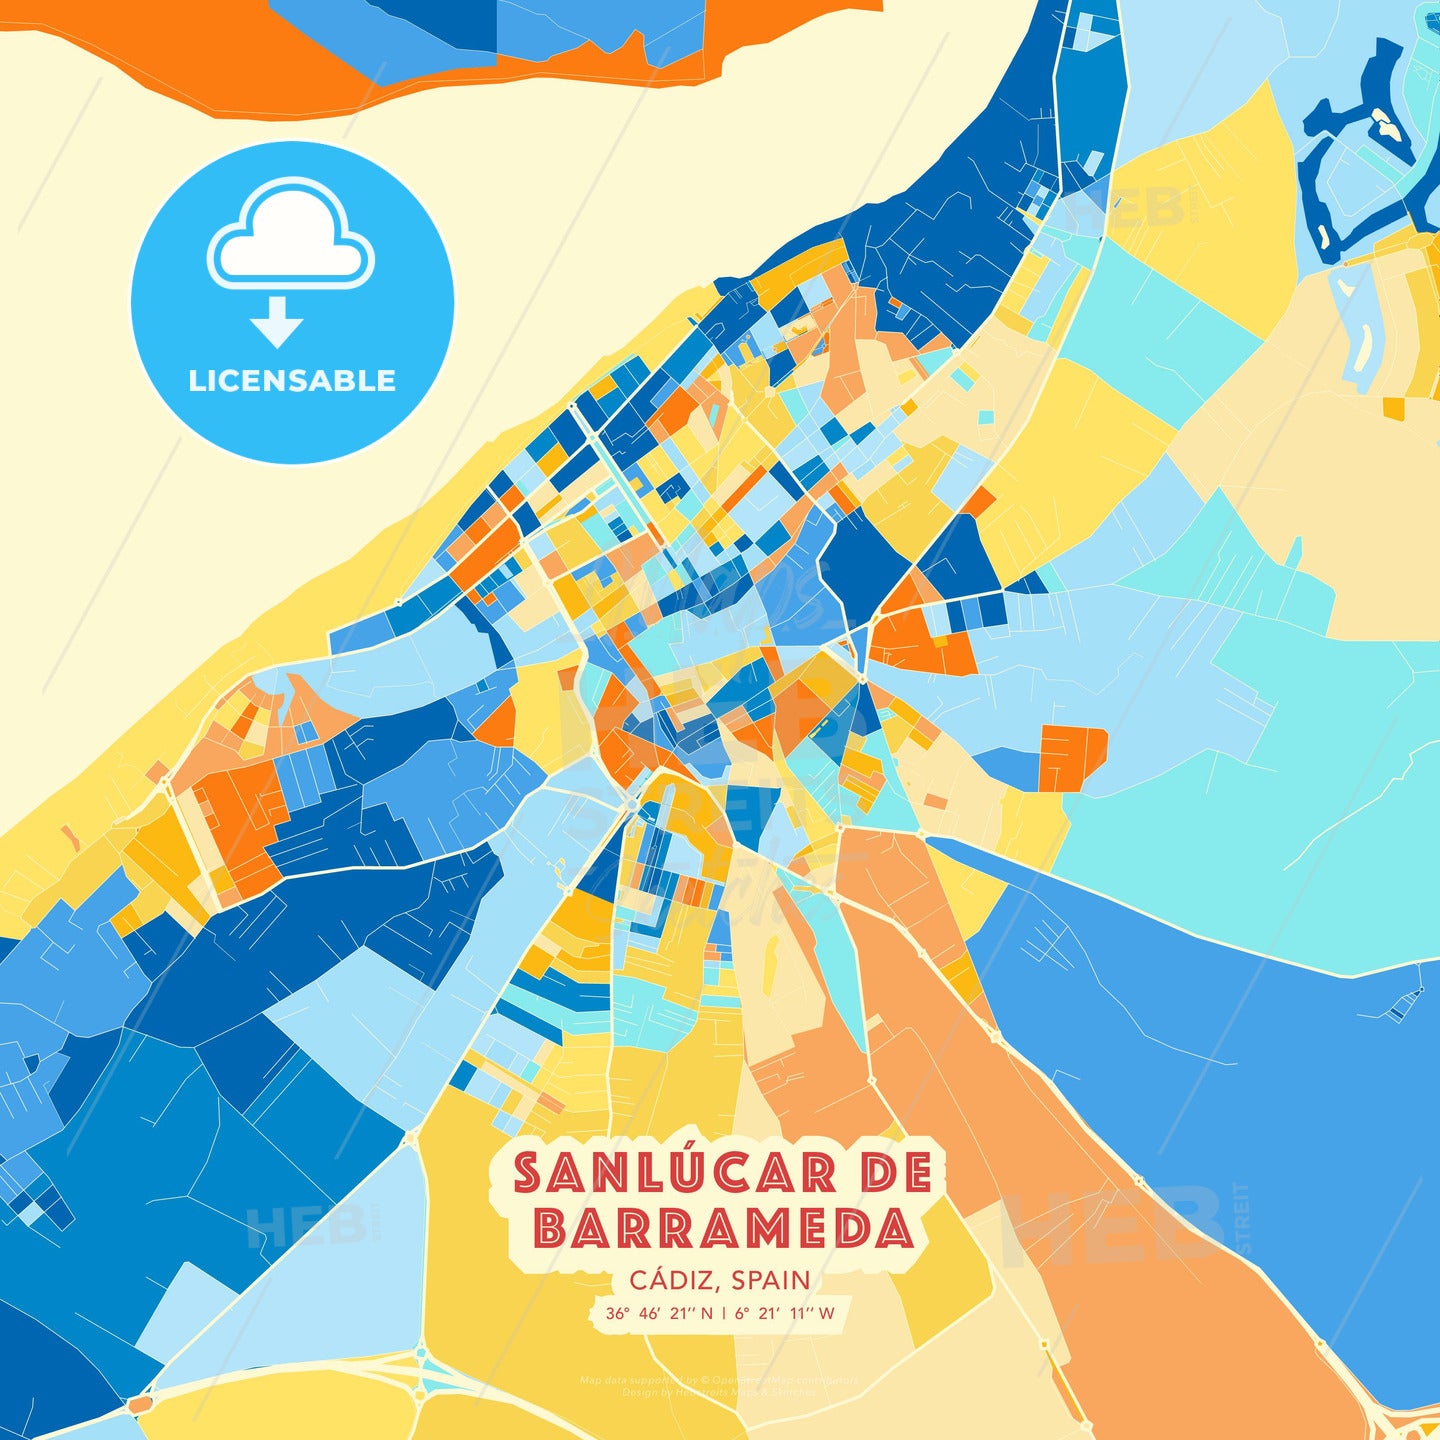 Sanlúcar de Barrameda, Cádiz, Spain, map - HEBSTREITS Sketches